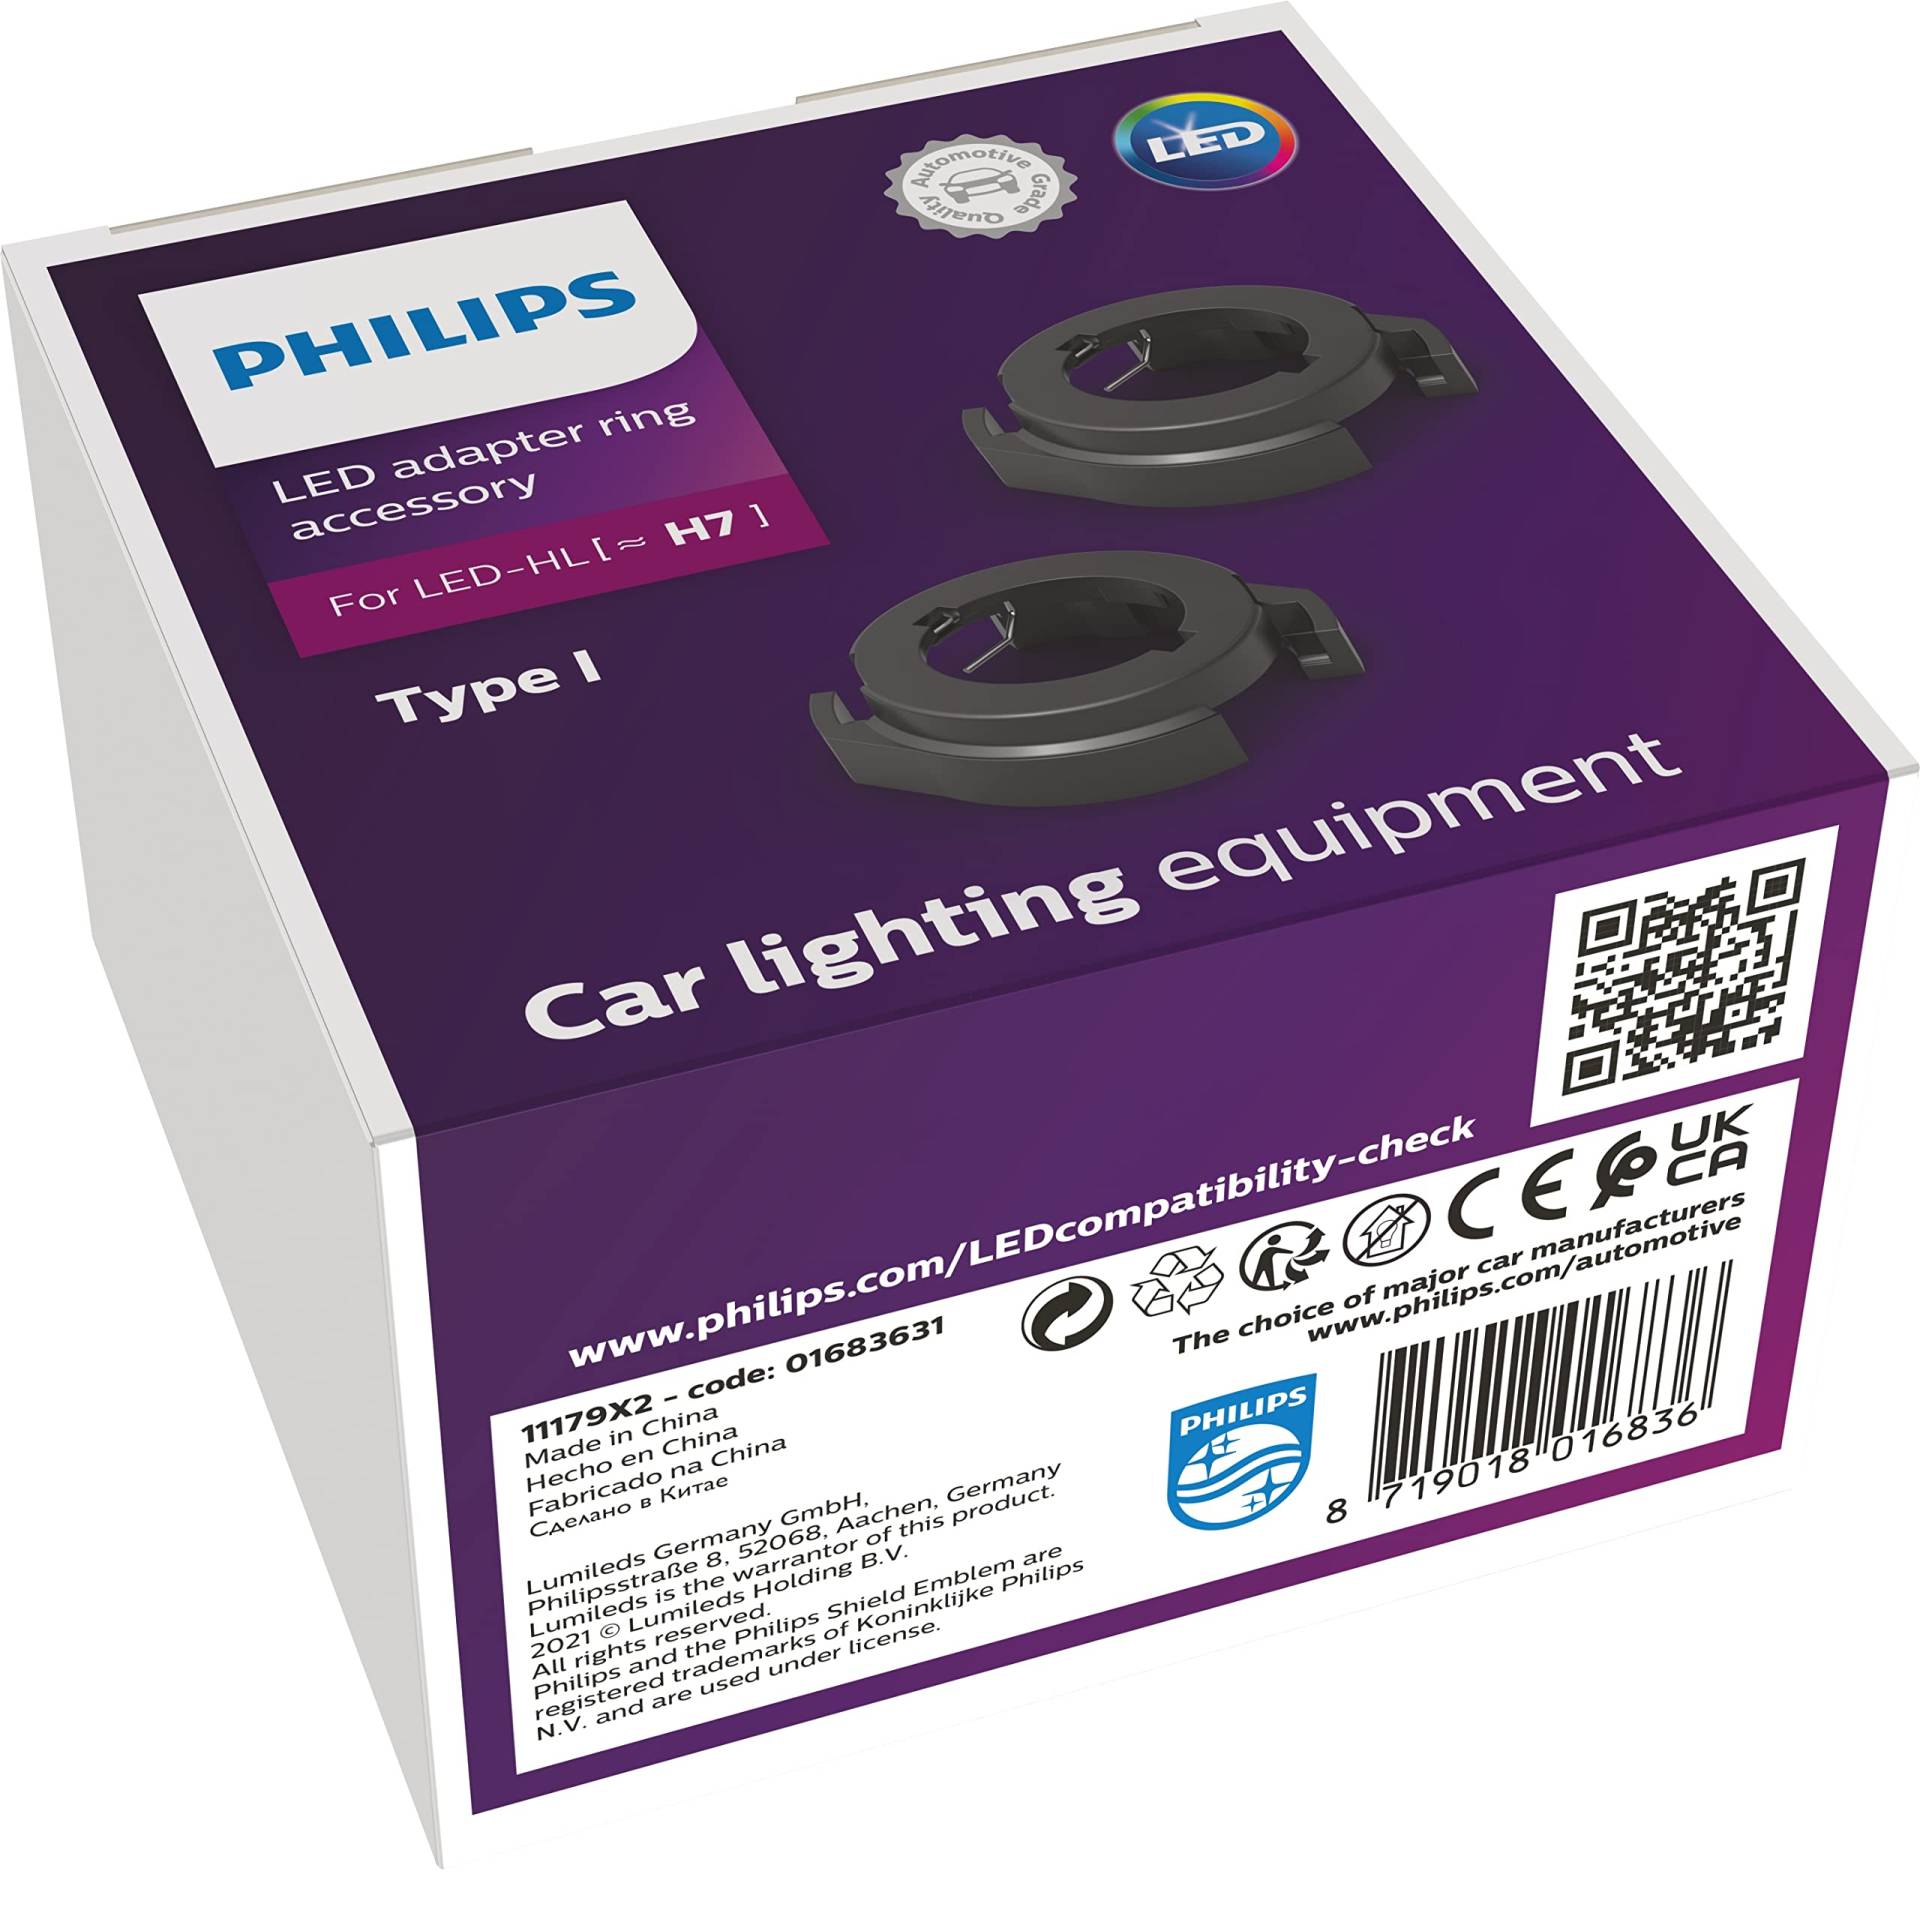 Philips 1683631 Adapter-Ring H7-LED Typ I, Lampenhalterung für Philips Ultinon Pro6000 H7-LED von Philips automotive lighting